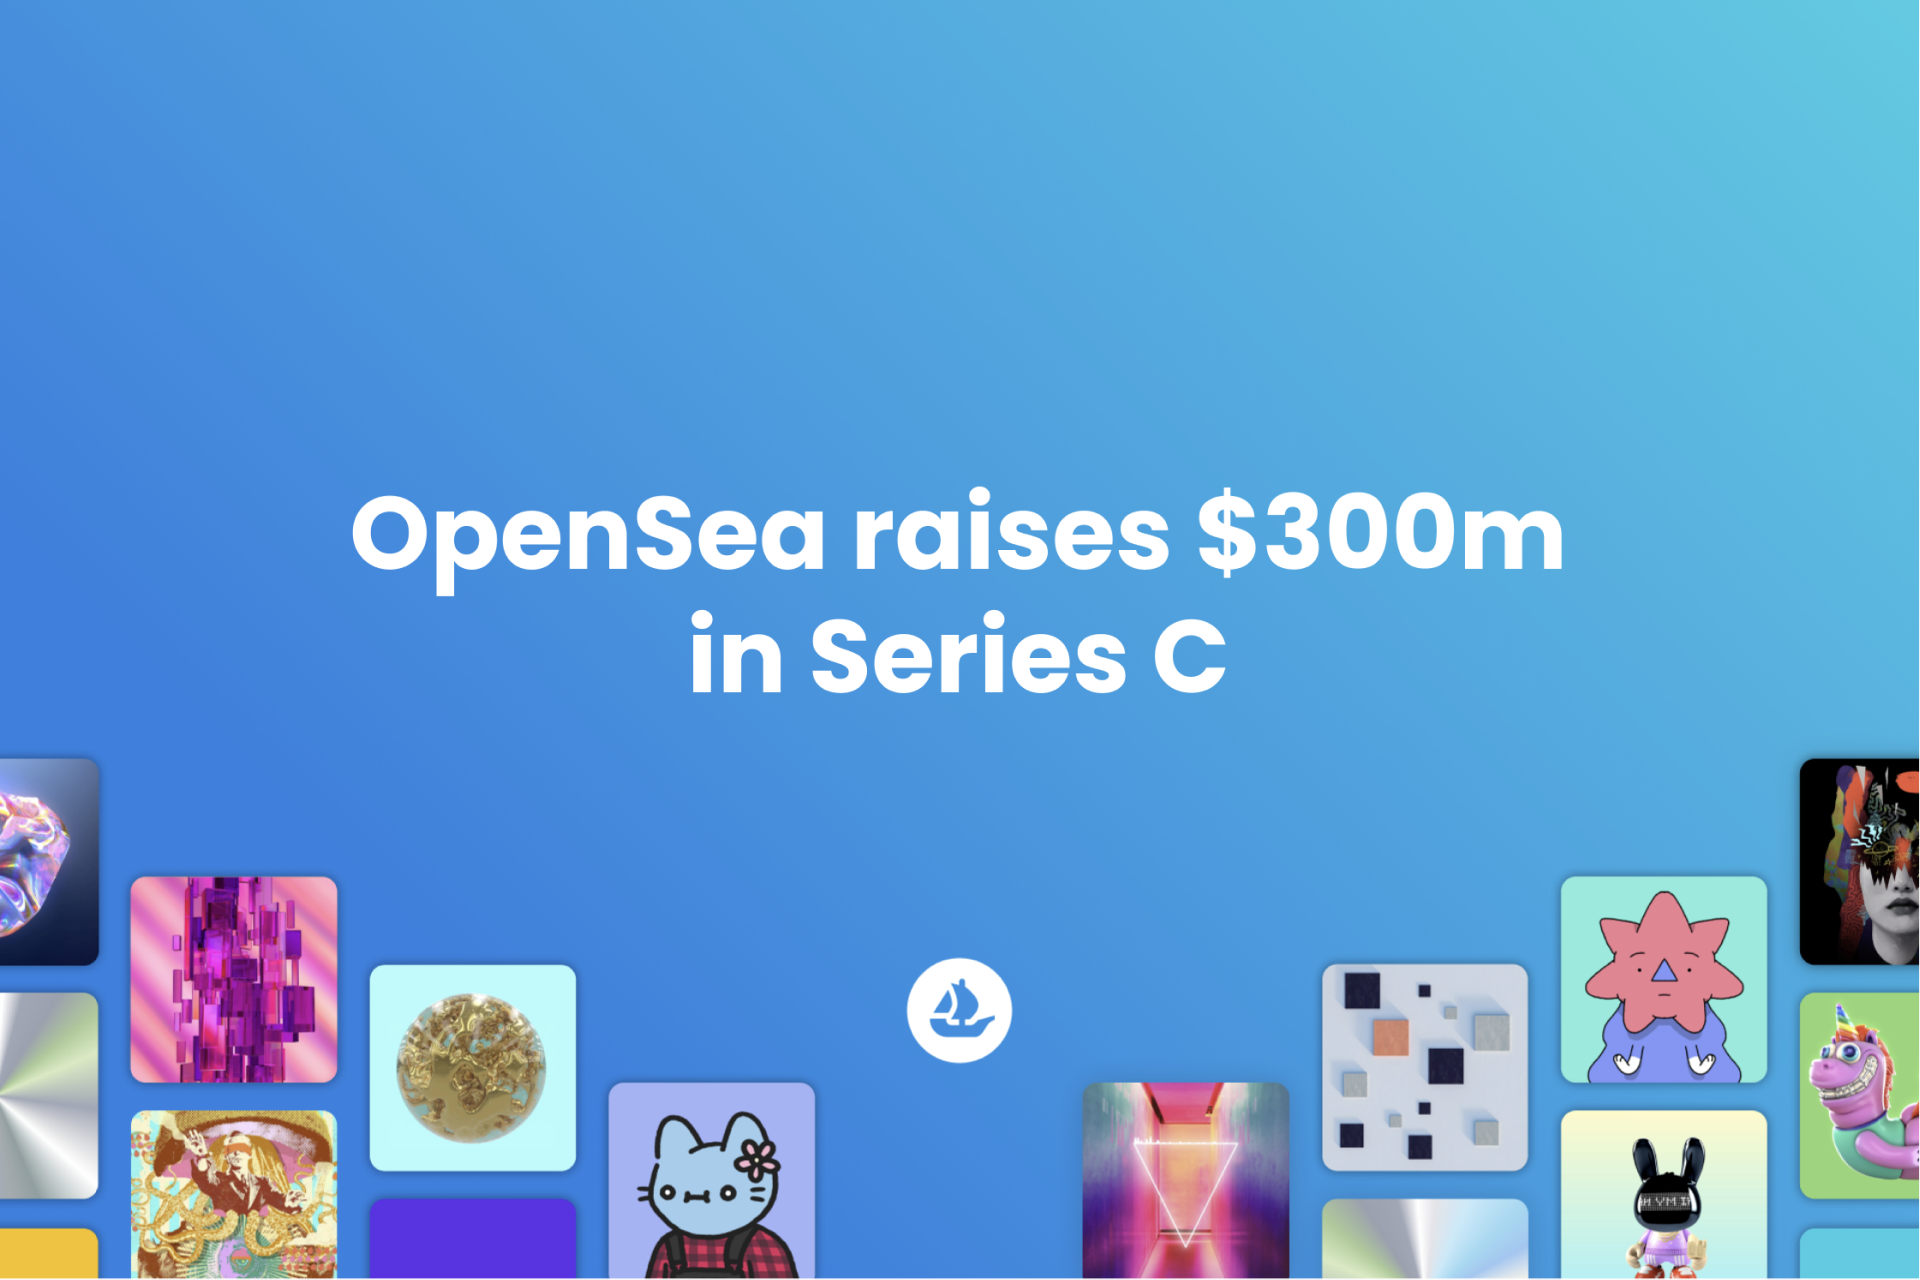 OpenSea——全球最大的NFT交易平台，做“DAO”后会发币吗